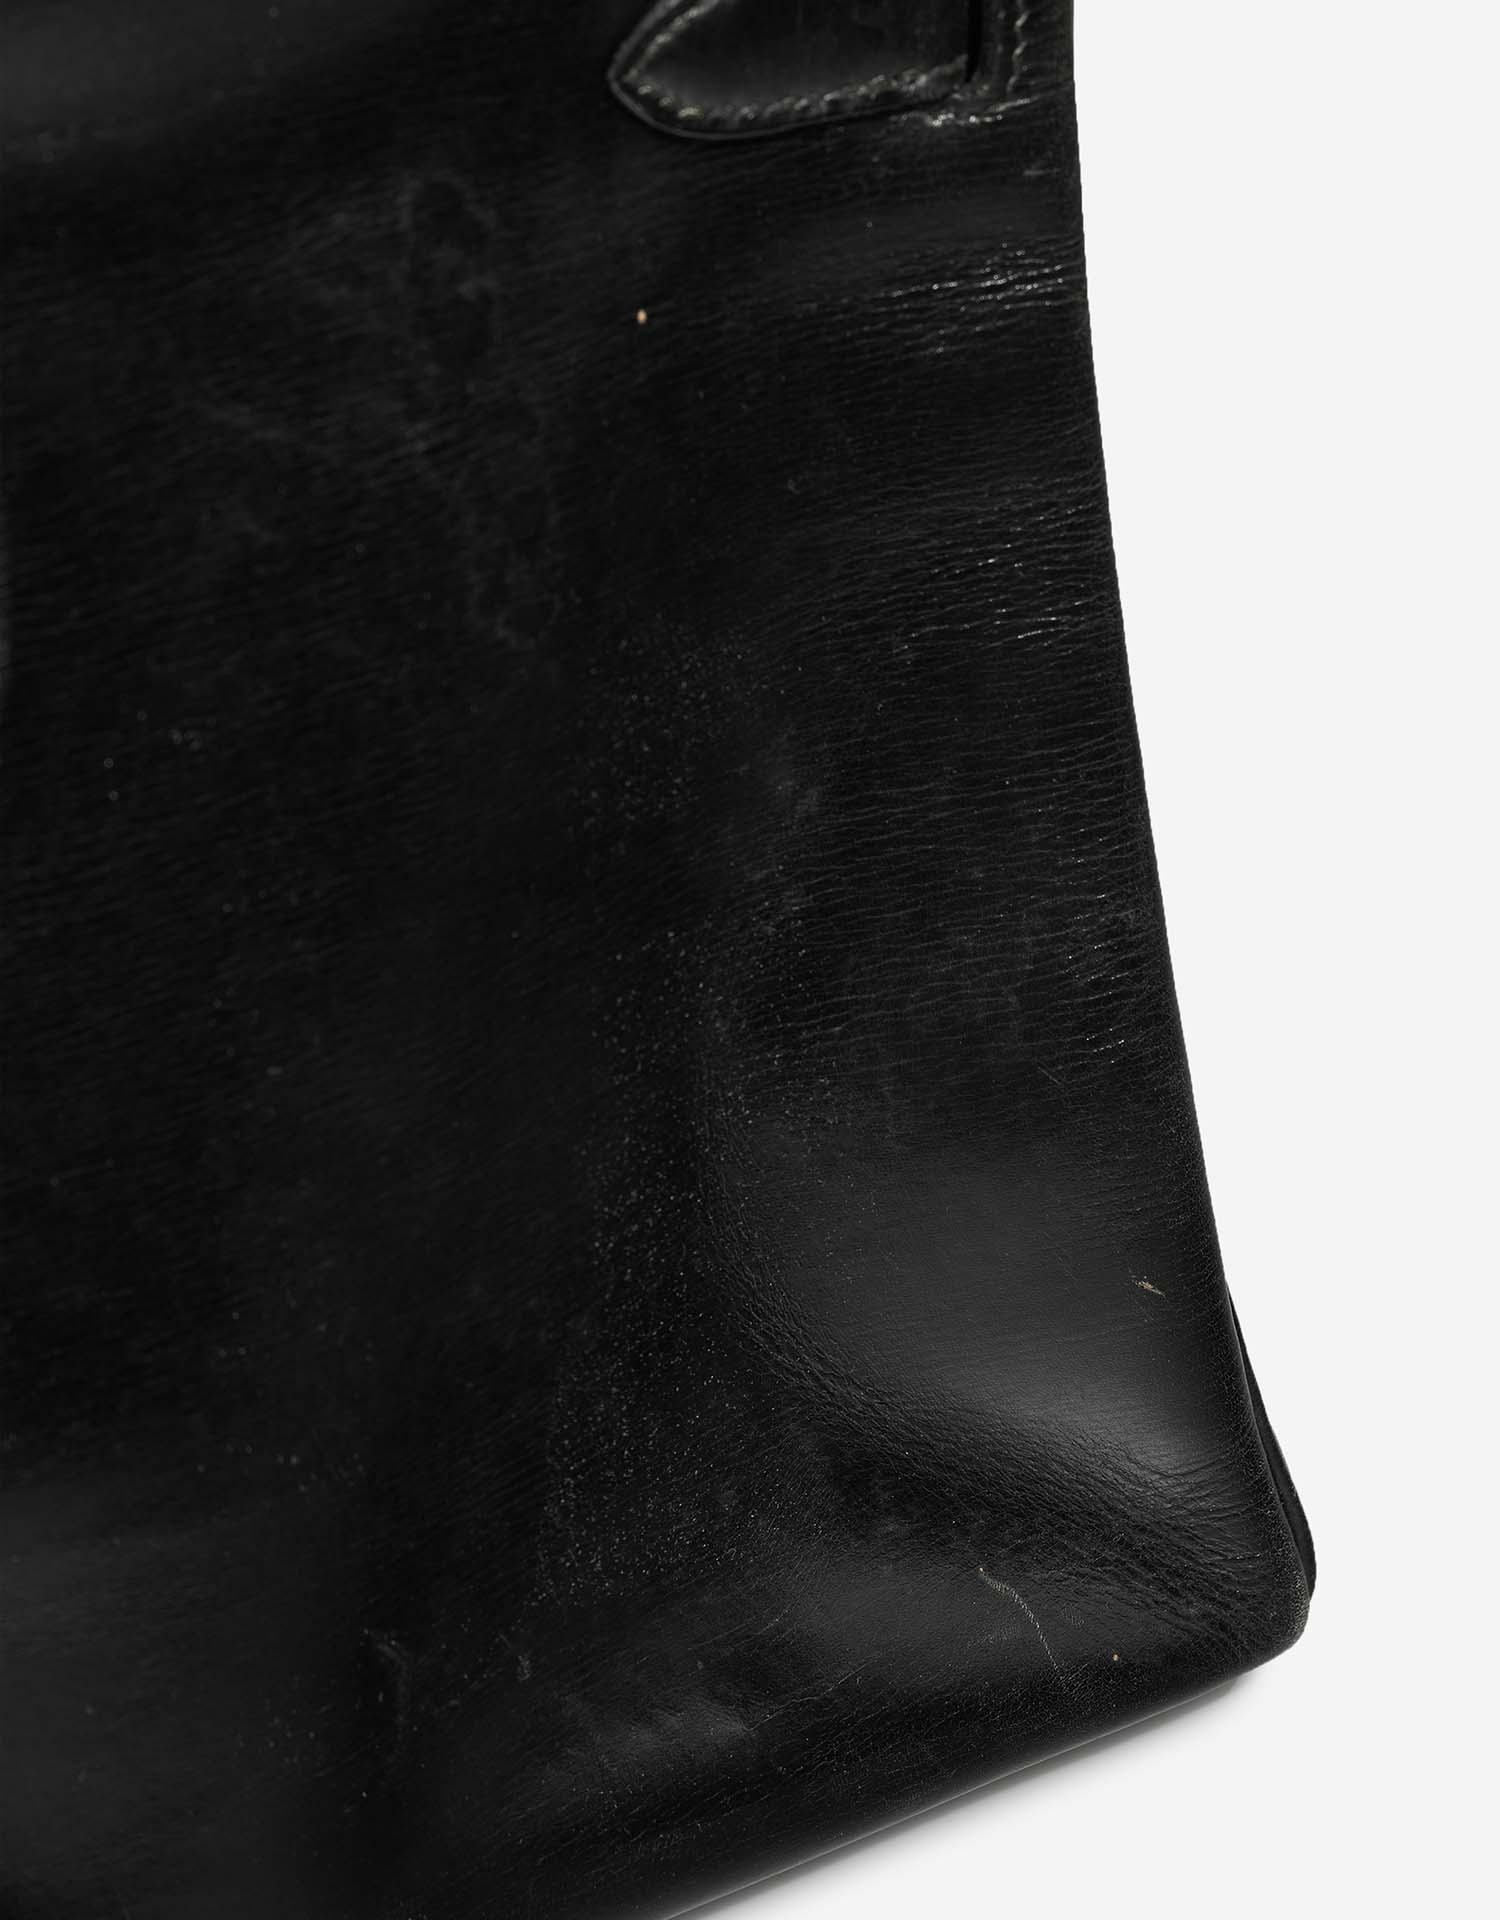 Hermès Kelly 32 Black signs of wear| Sell your designer bag on Saclab.com